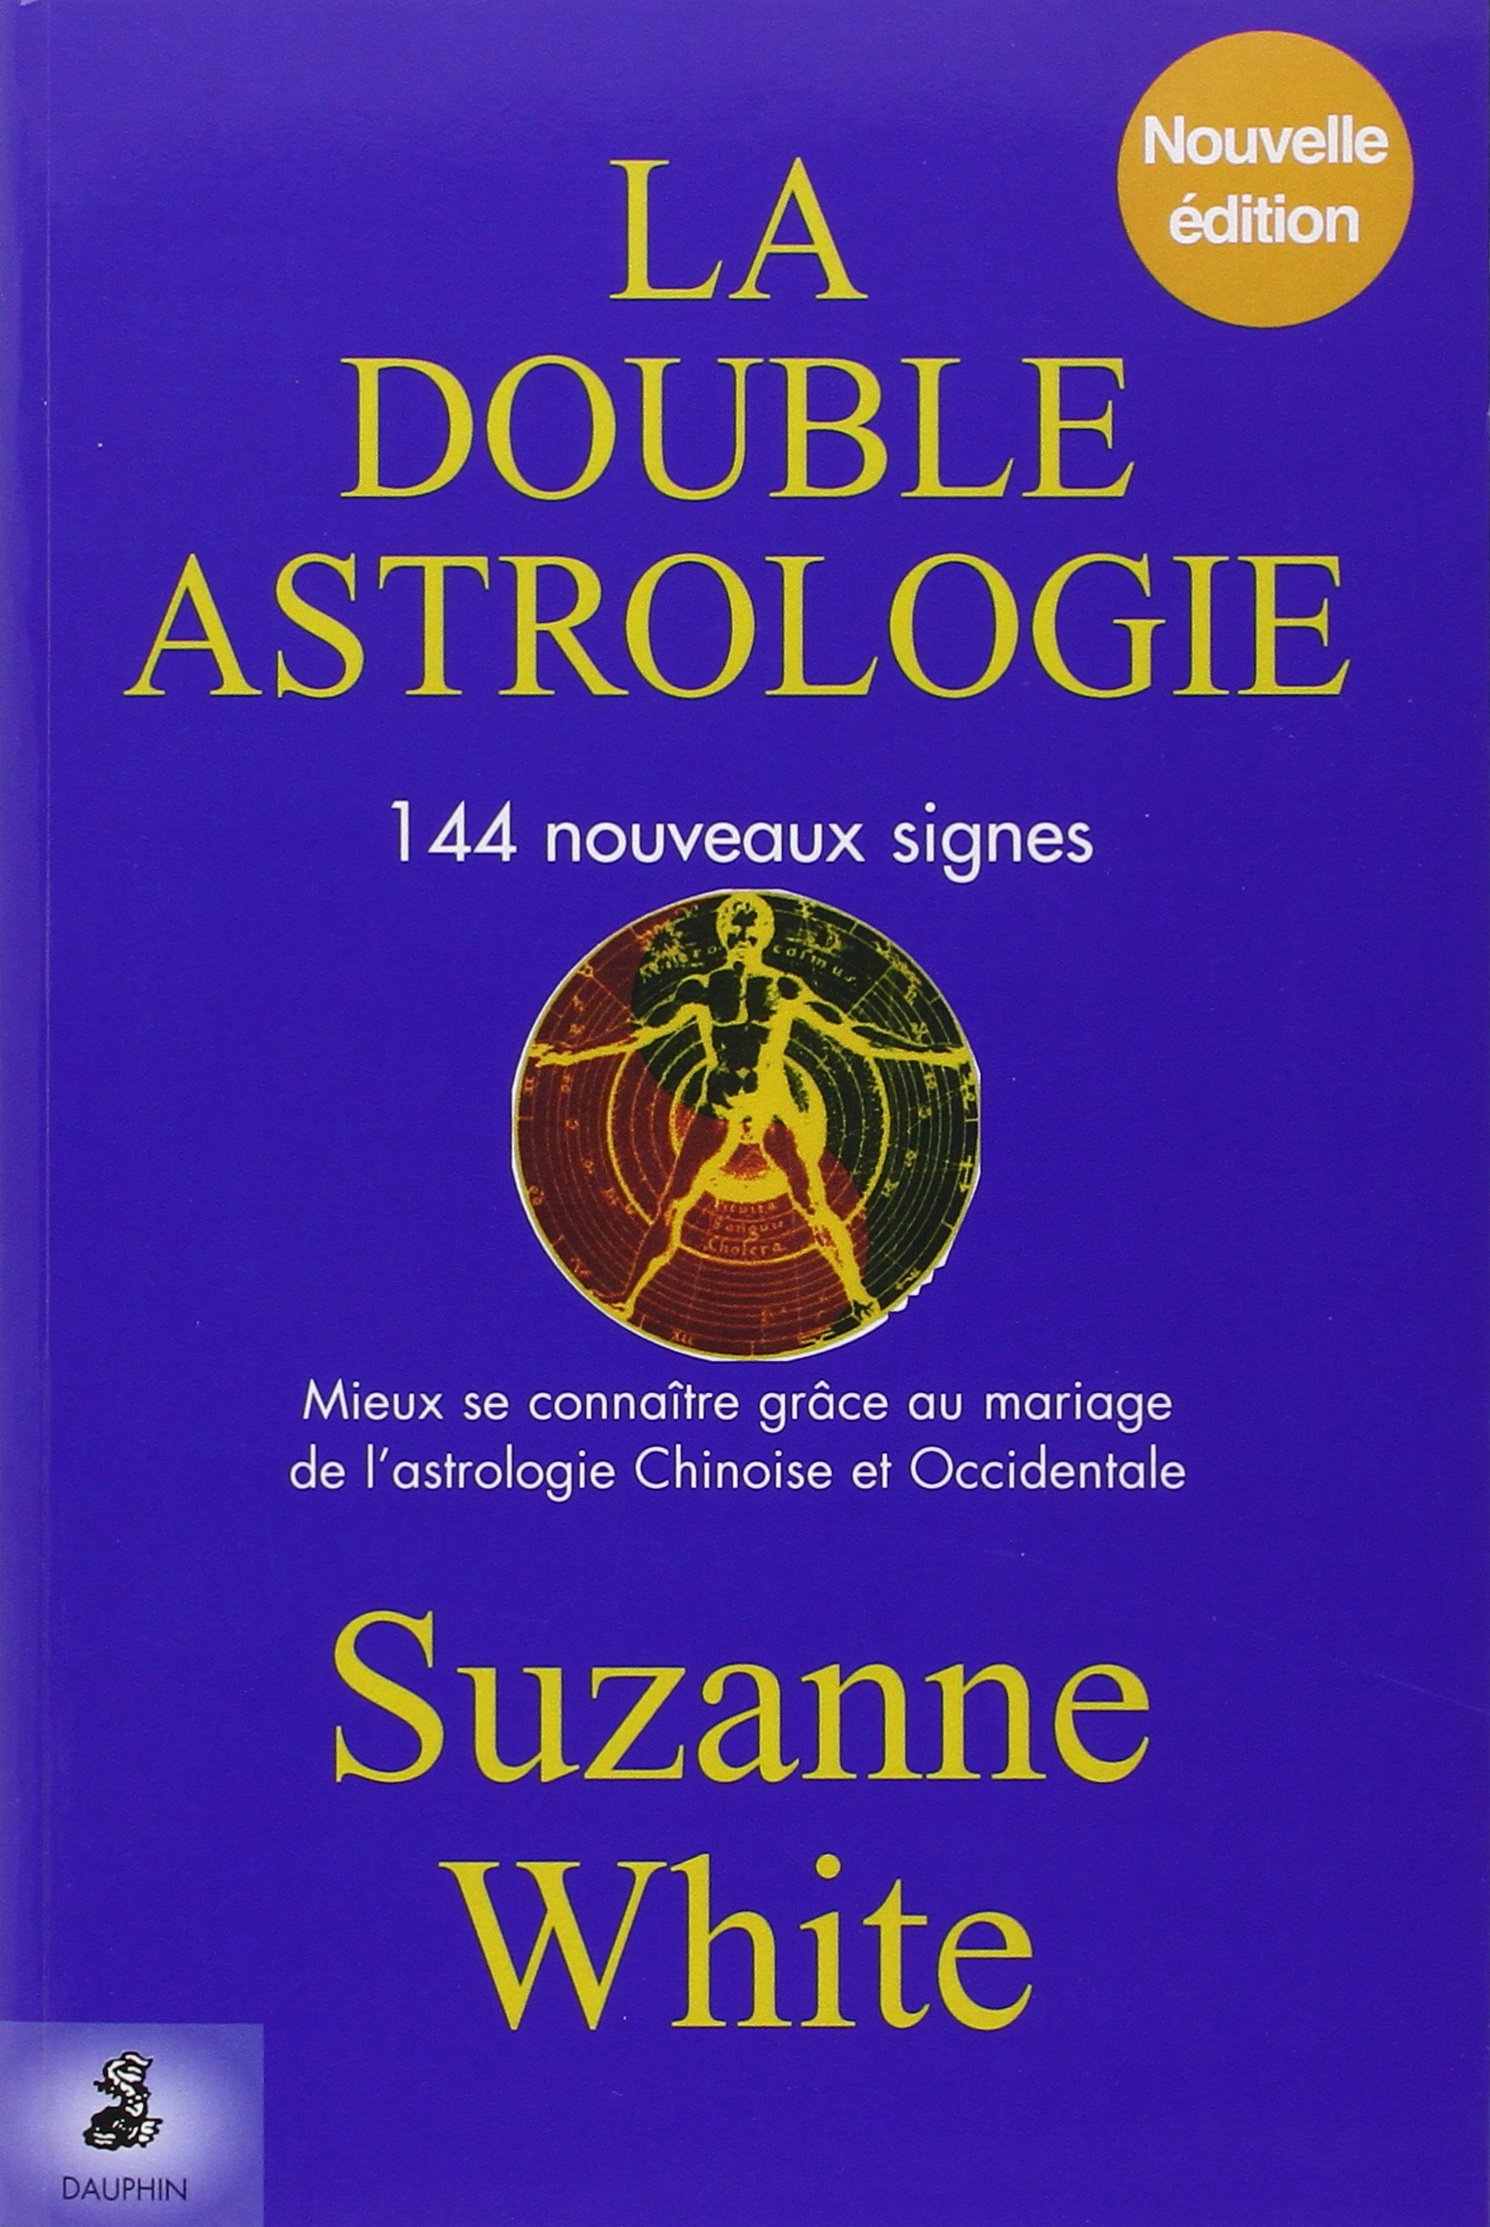 Download Double Astrologie Suzanne White Pdf